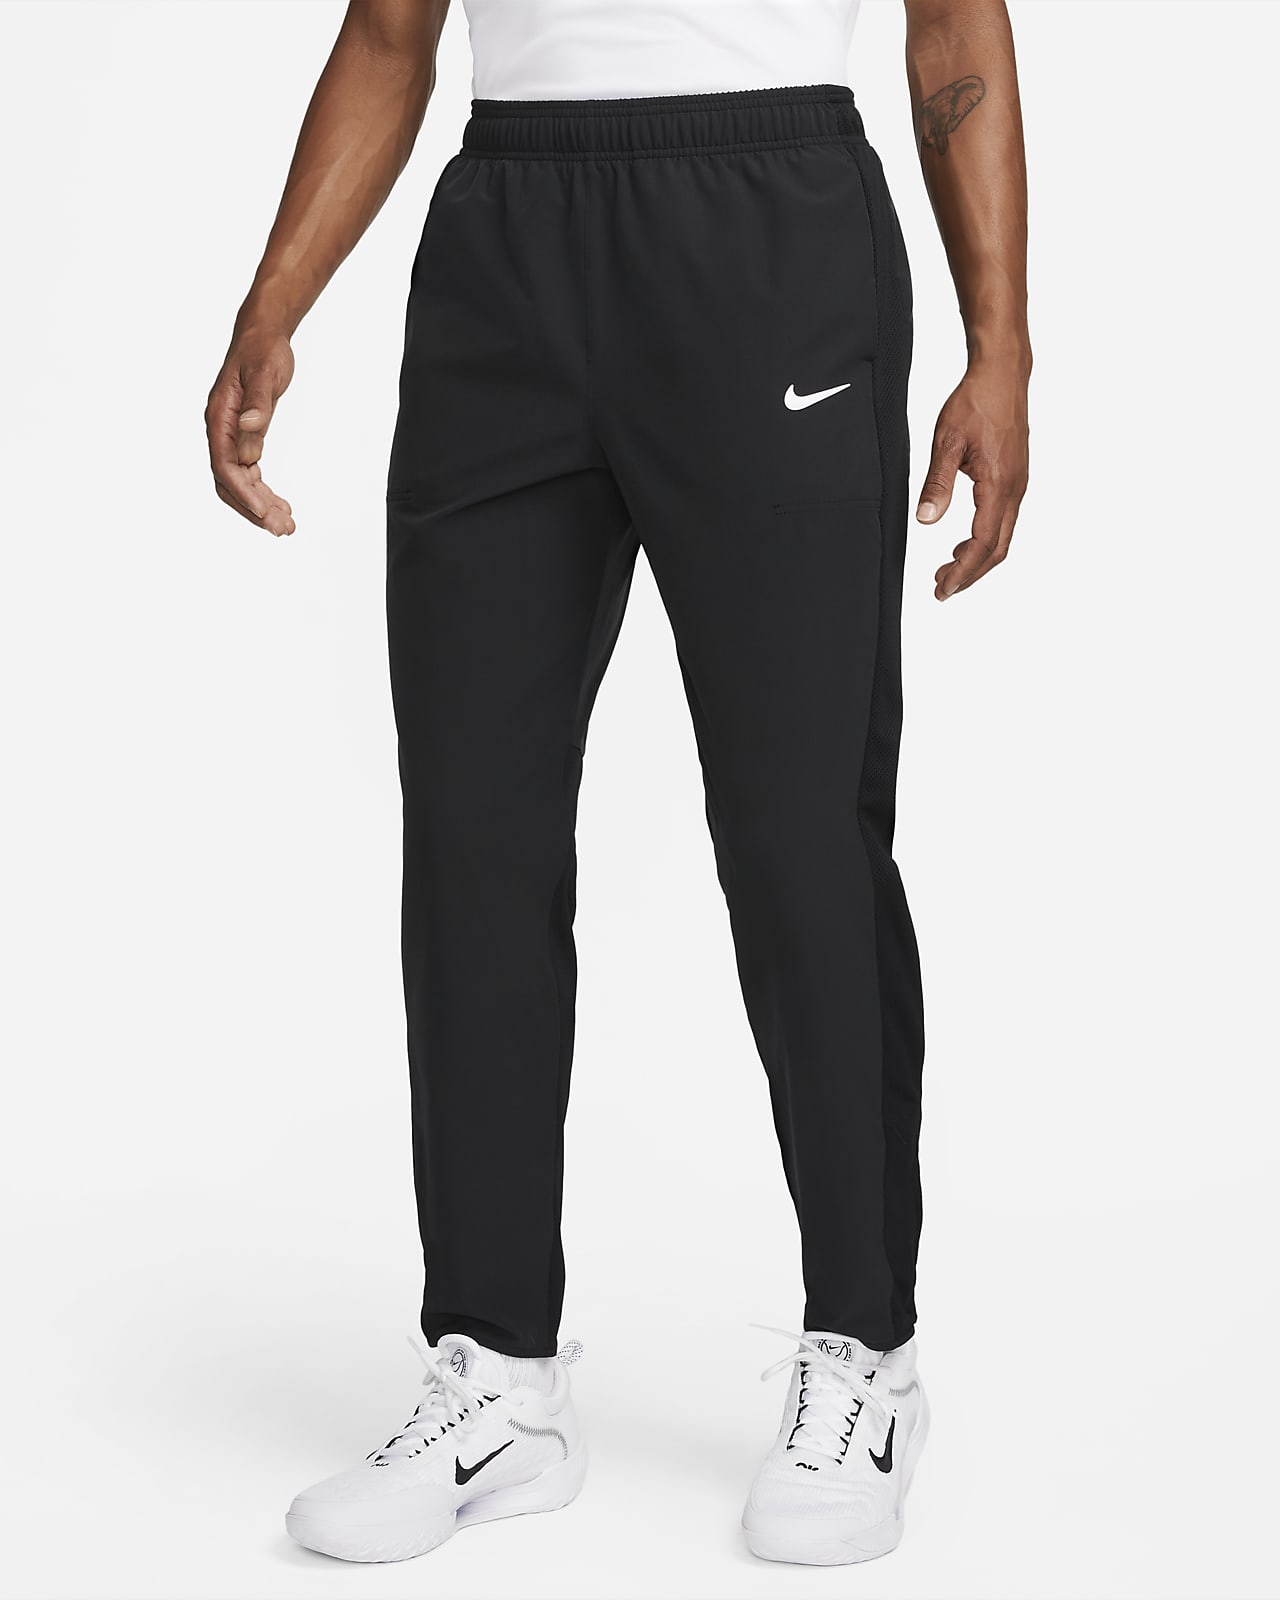 Nike Court Men's Tennis Trousers Green Athletic Pants Size Medium M  DC0621-384 | eBay